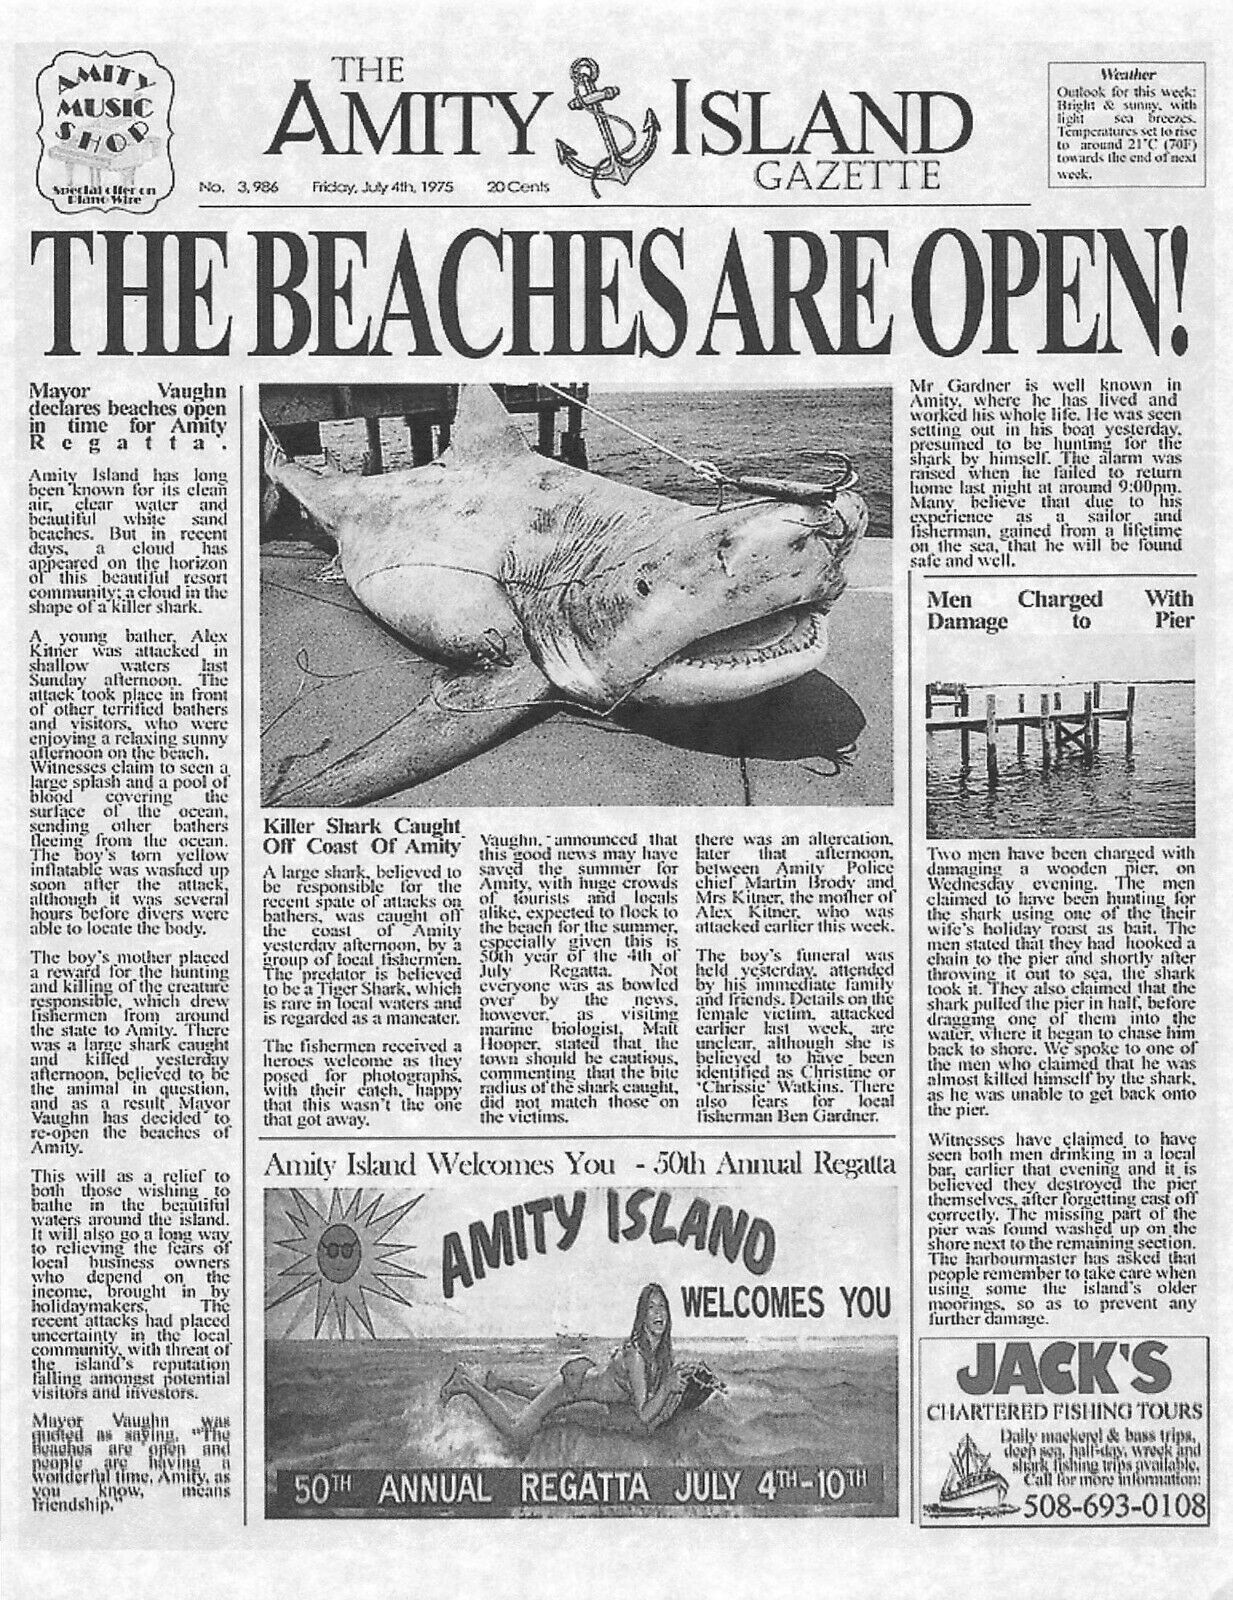 1975 Jaws Amity Island Gazette The Beaches Are Open! > Print > Great White Shark